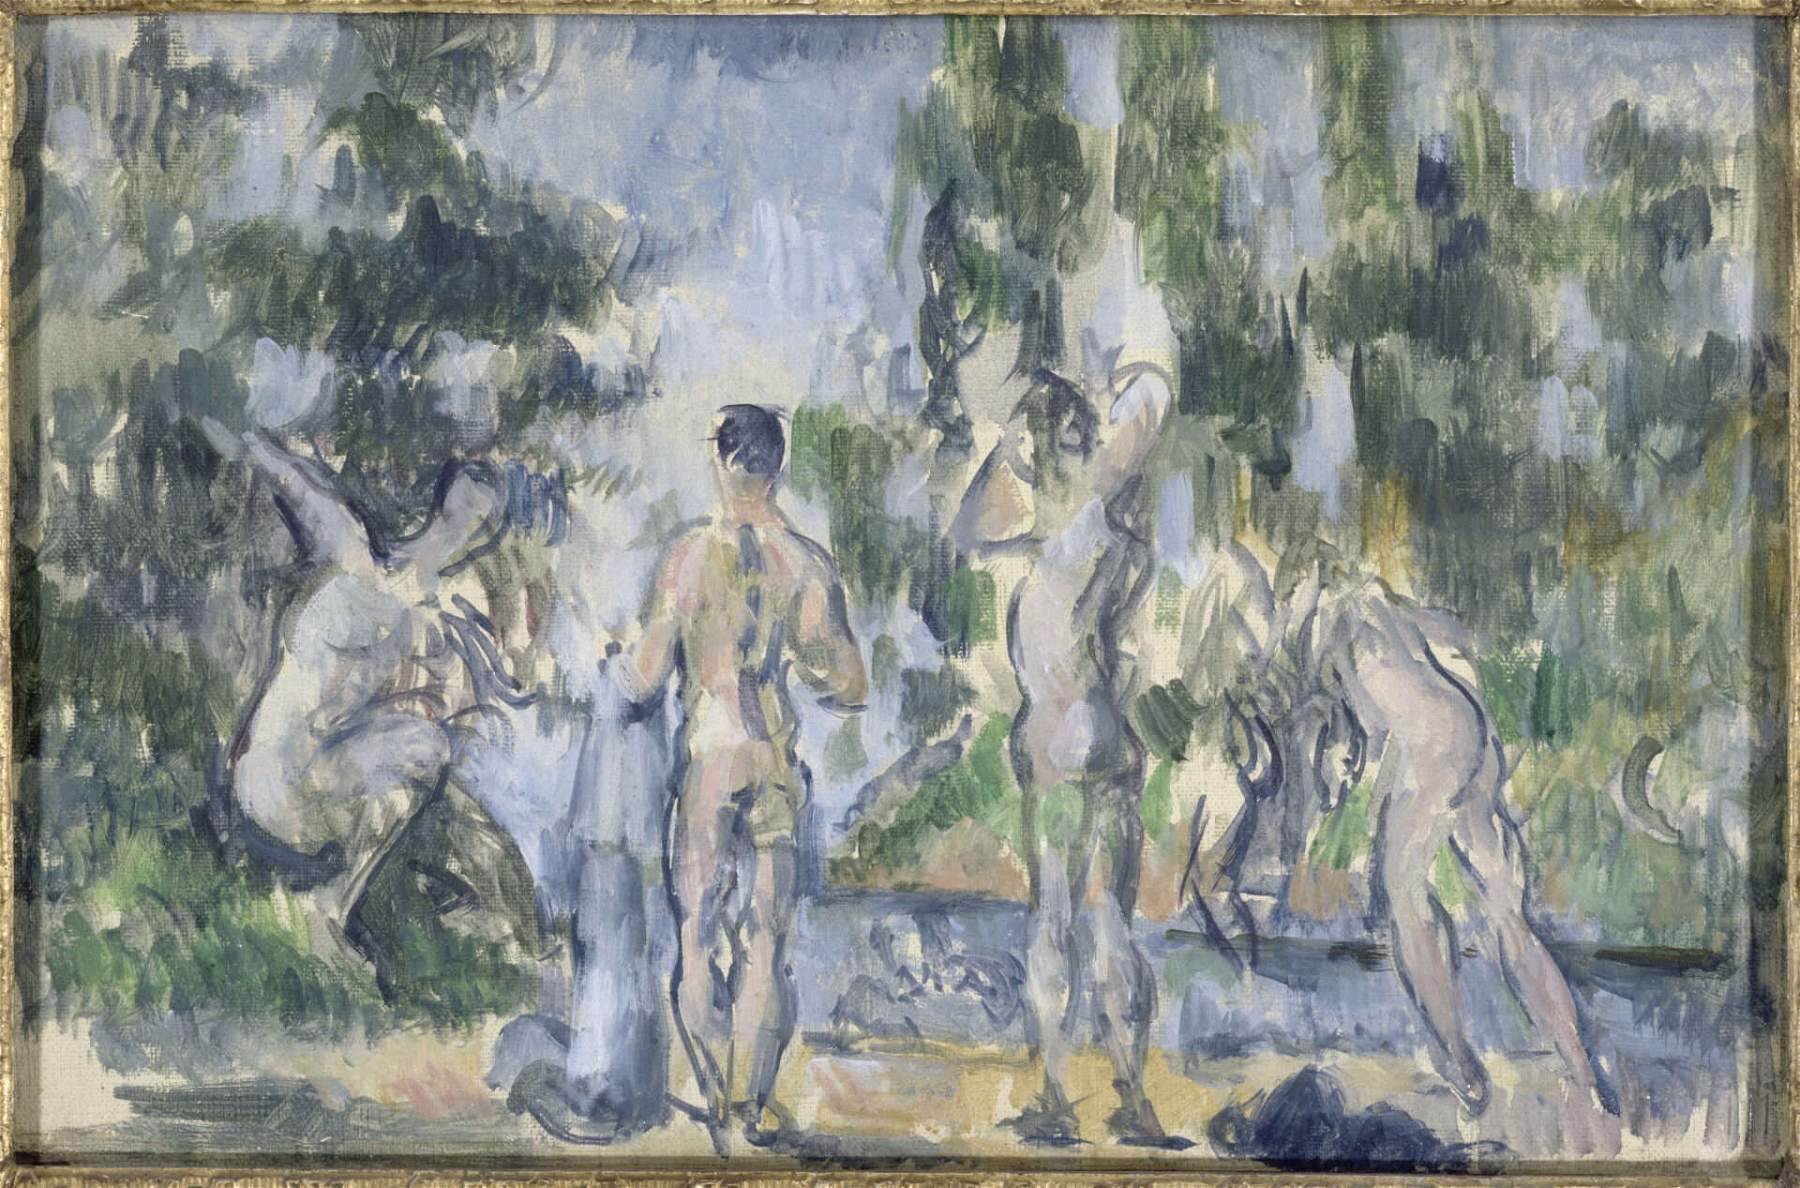 Milan, a major exhibition at Palazzo Reale compares Cézanne and Renoir